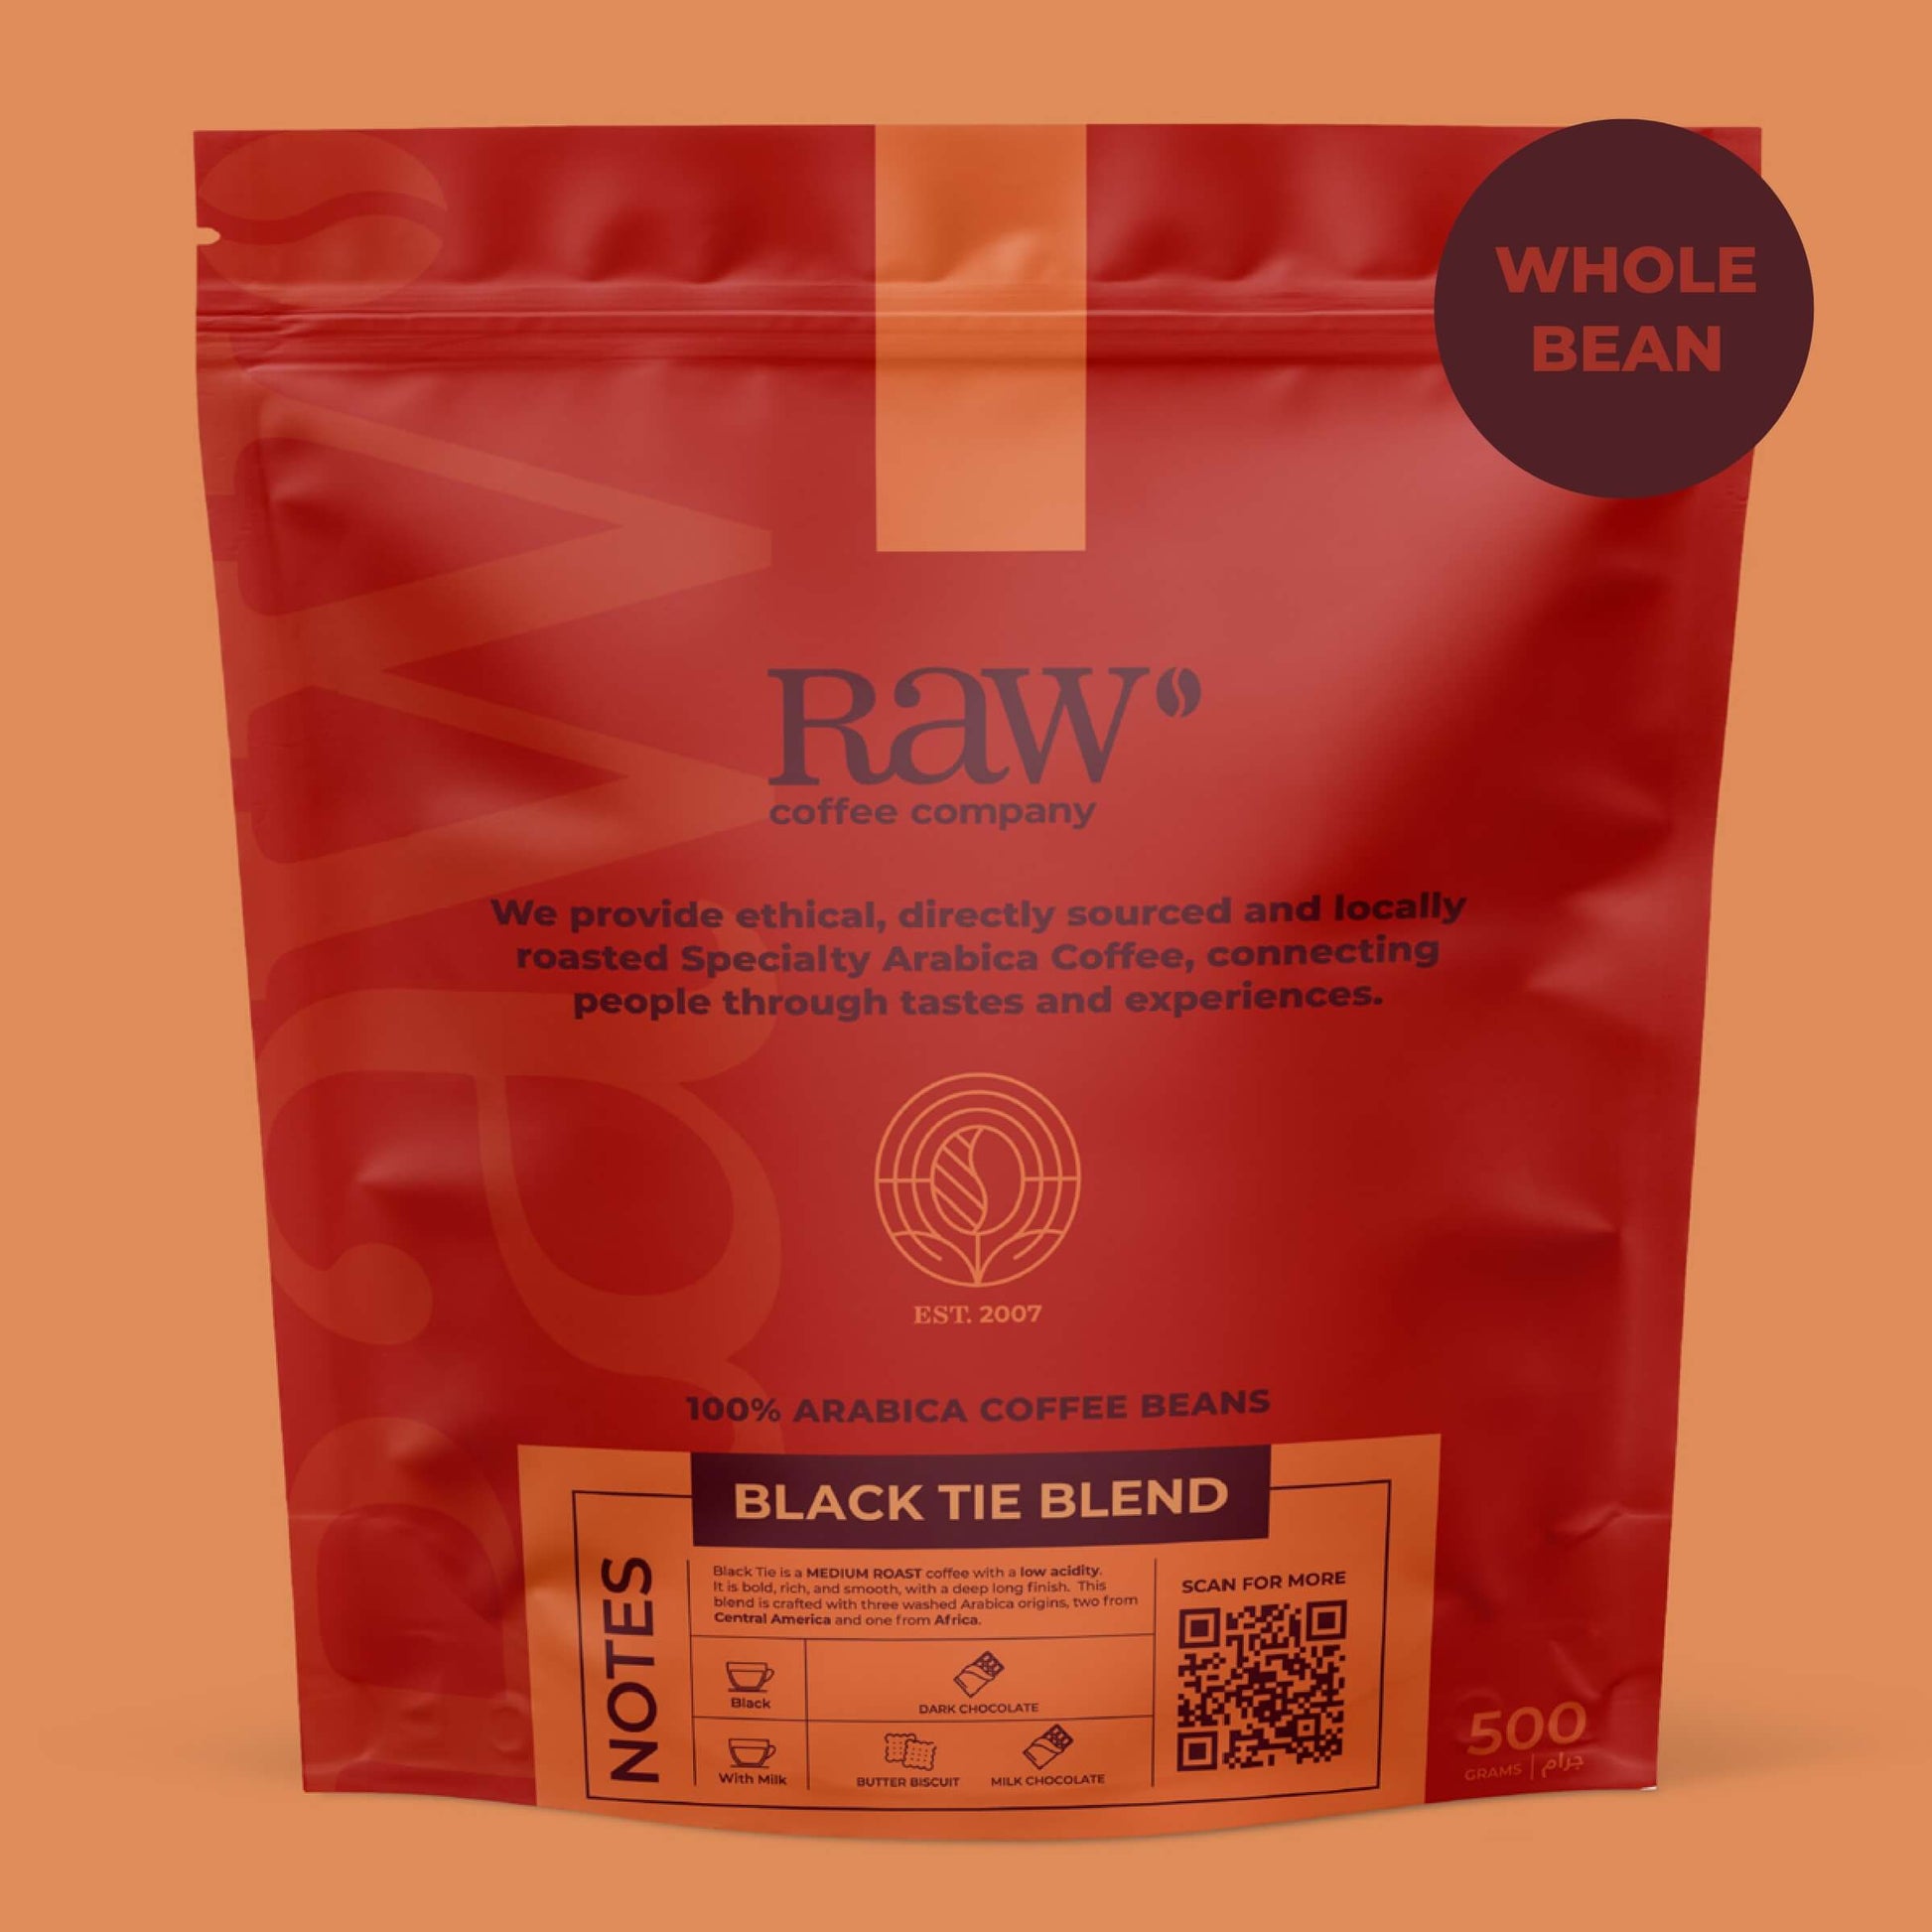 Black-Tie-Blend-Coffee-Whole-Bean-500gm_RAW-Coffee-Company